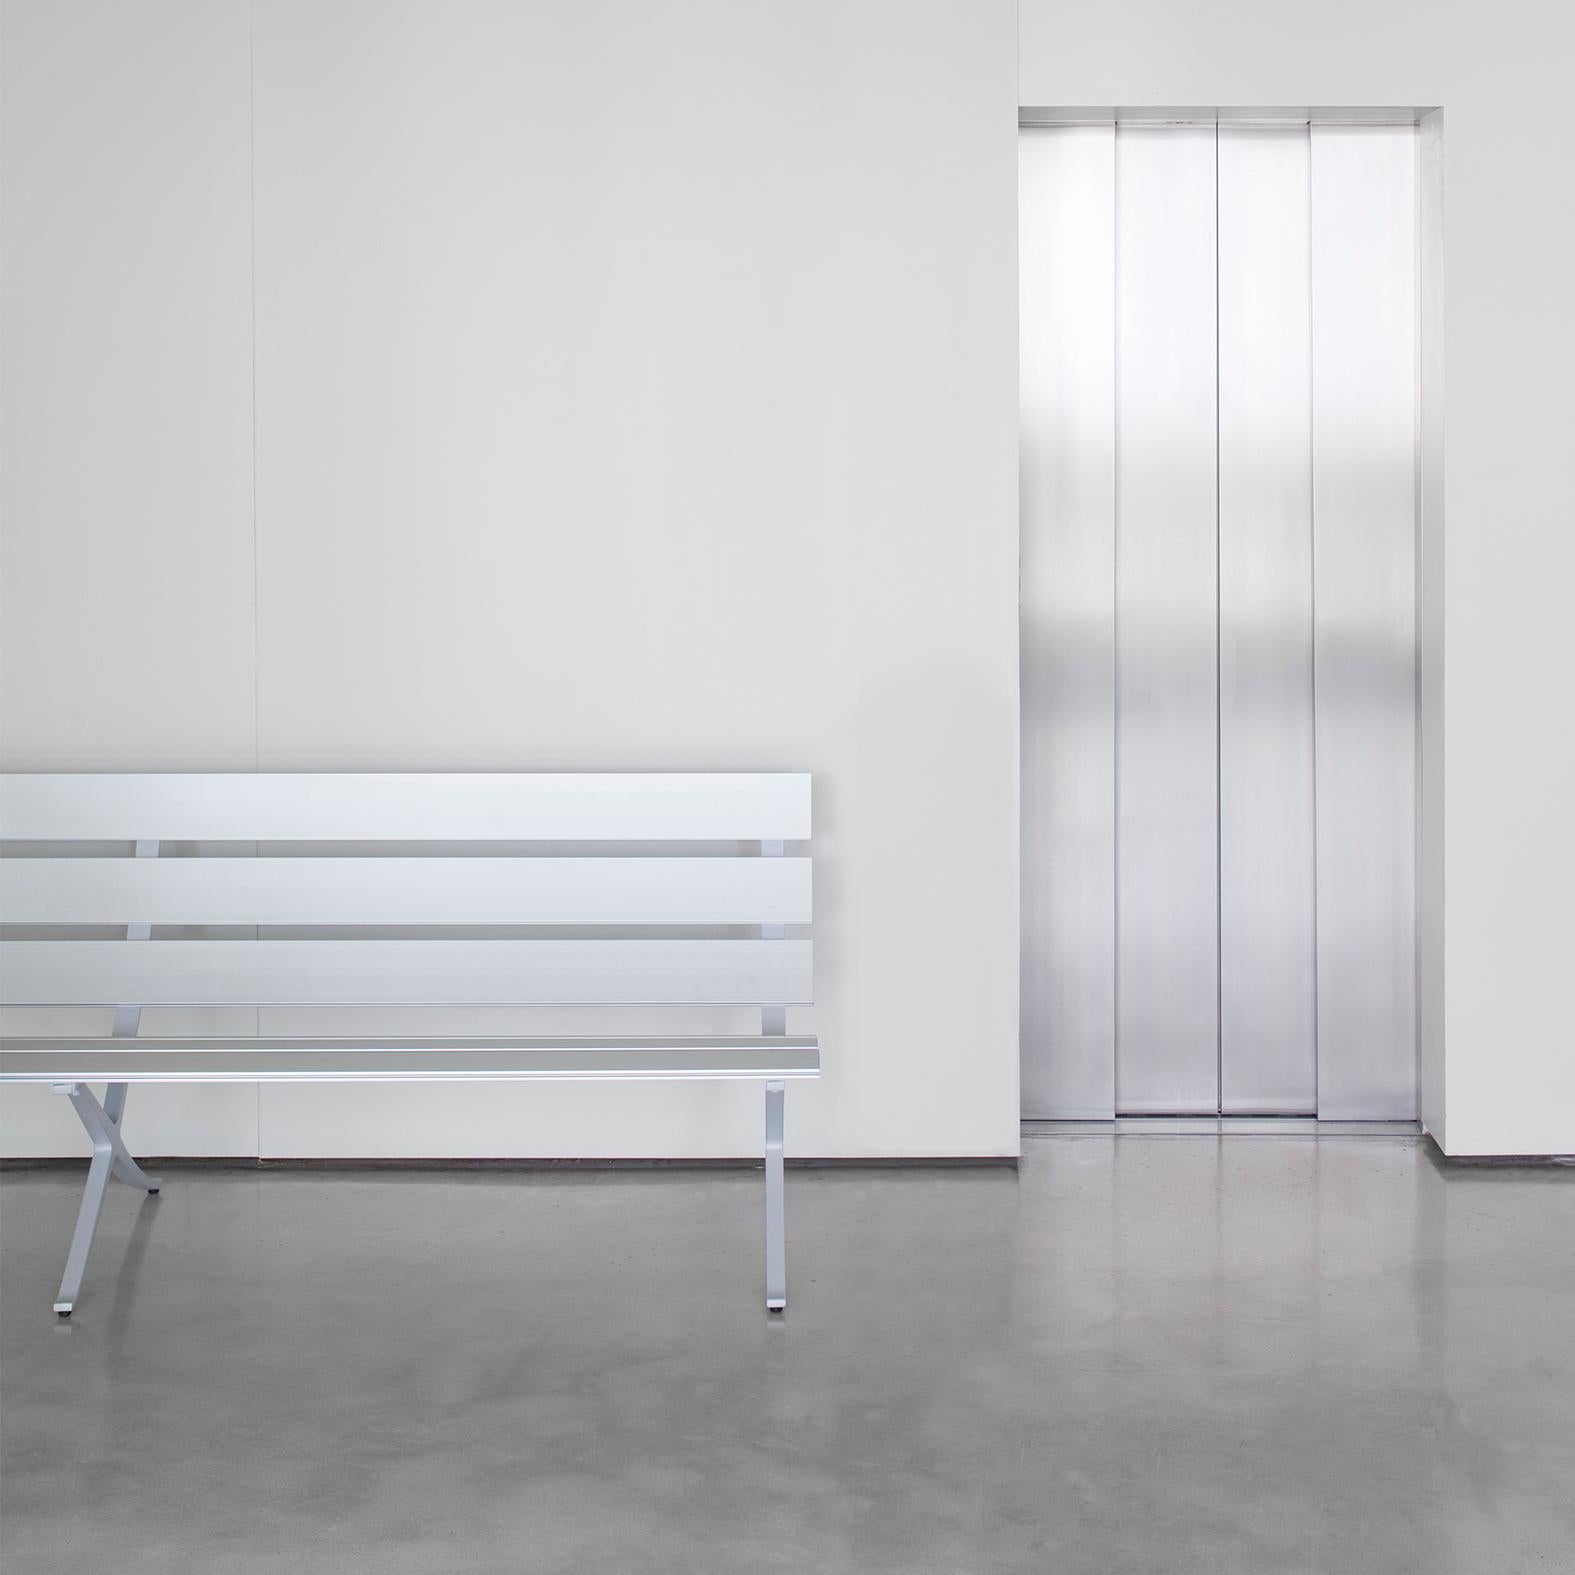 Spanish Konstantin Grcic Contemporary Aluminium Bench 'B' for BD Barcelona